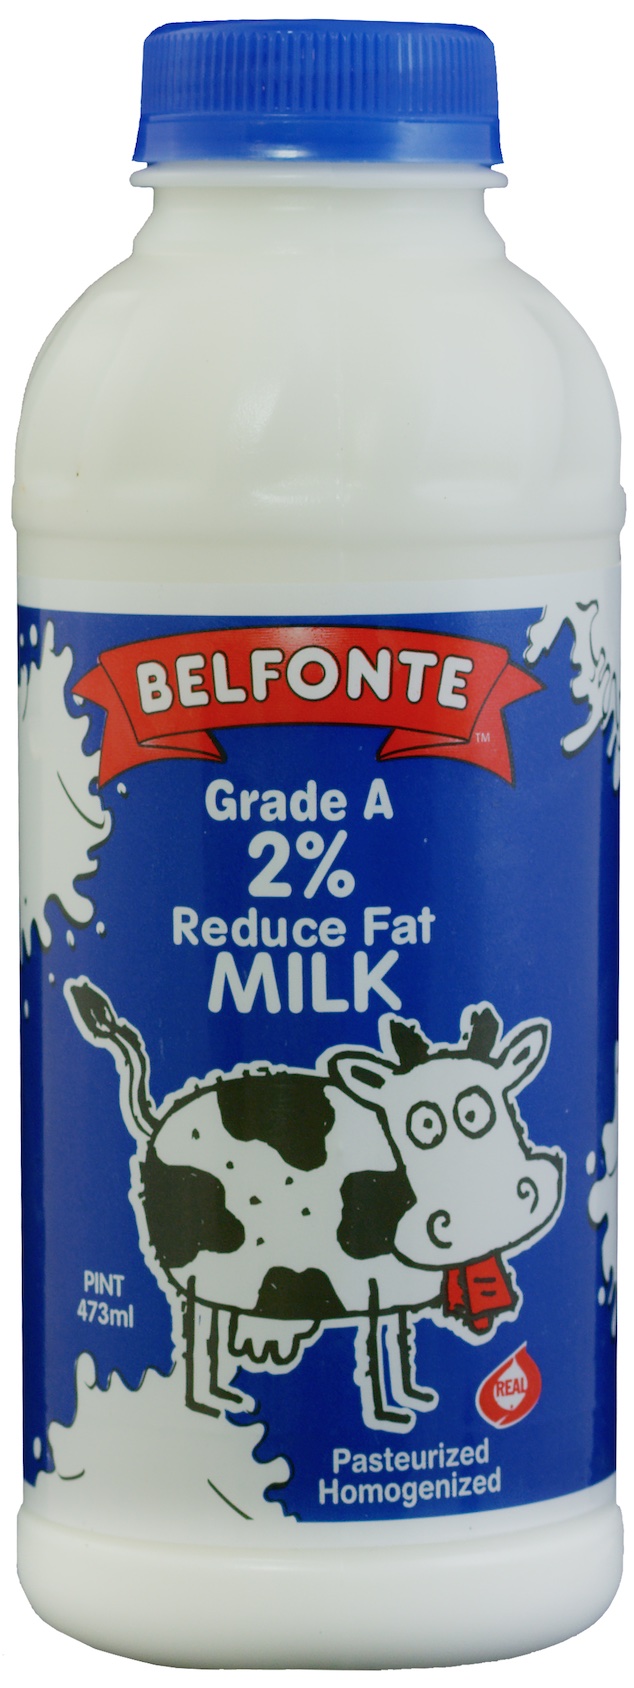 2% Reduced Fat Milk – Pint